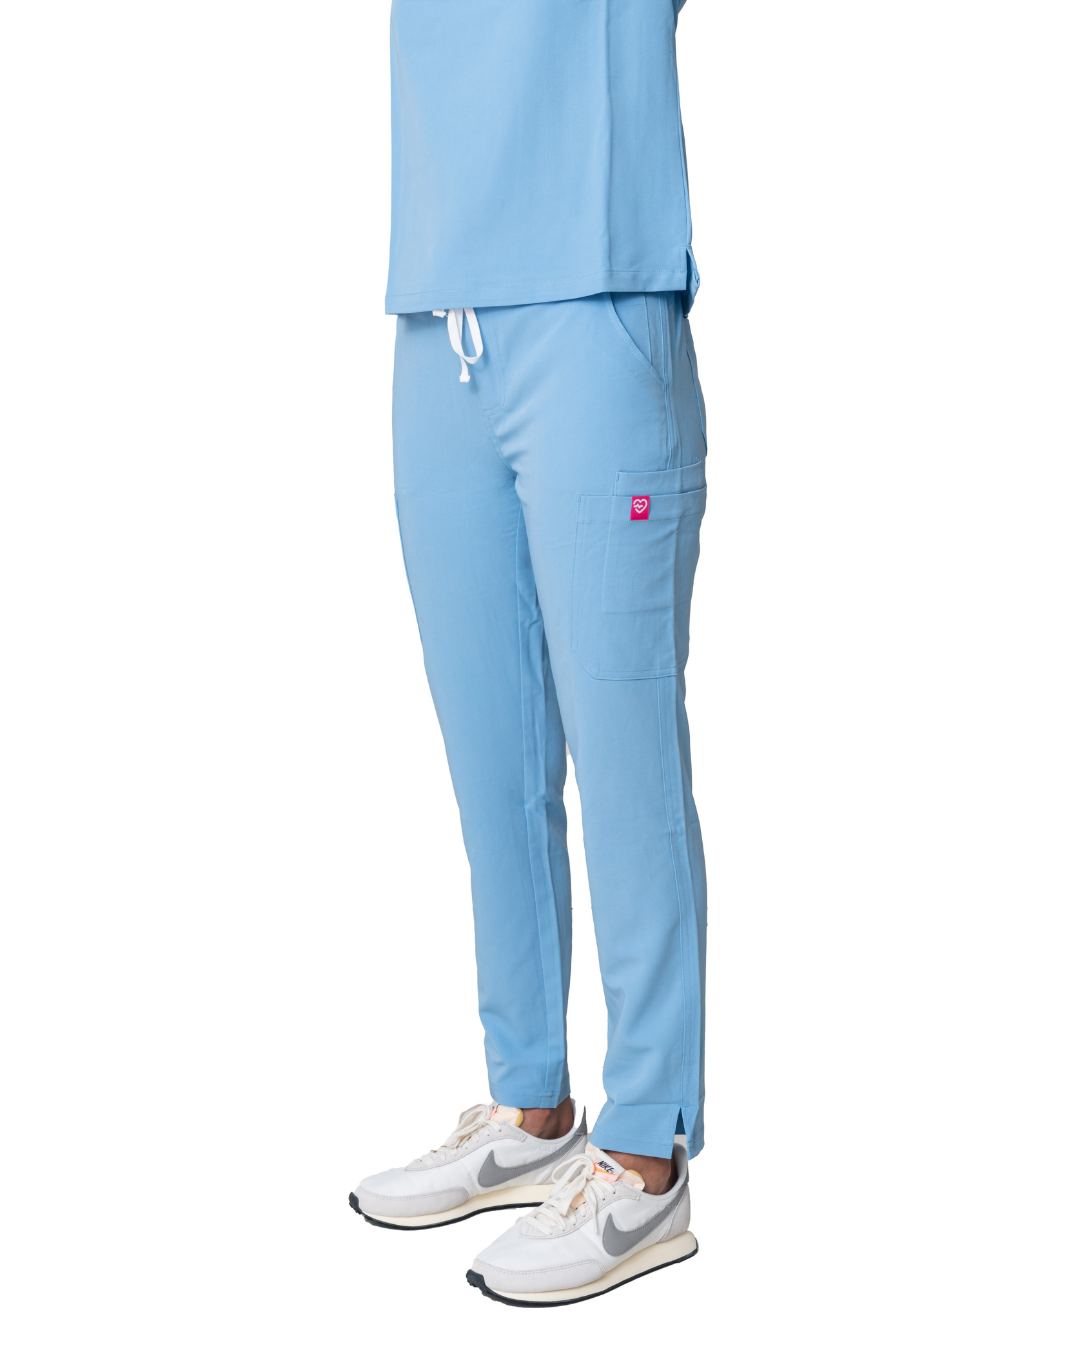 Jockey Scrubs: Jockey Womens Zipper Pocket Scrub Pants #2249 | Jockey Scrubs  and Nursing Uniforms for Nursing and Medical Professionals, Discount Jockey  Fashion Scrubs and Medical ware